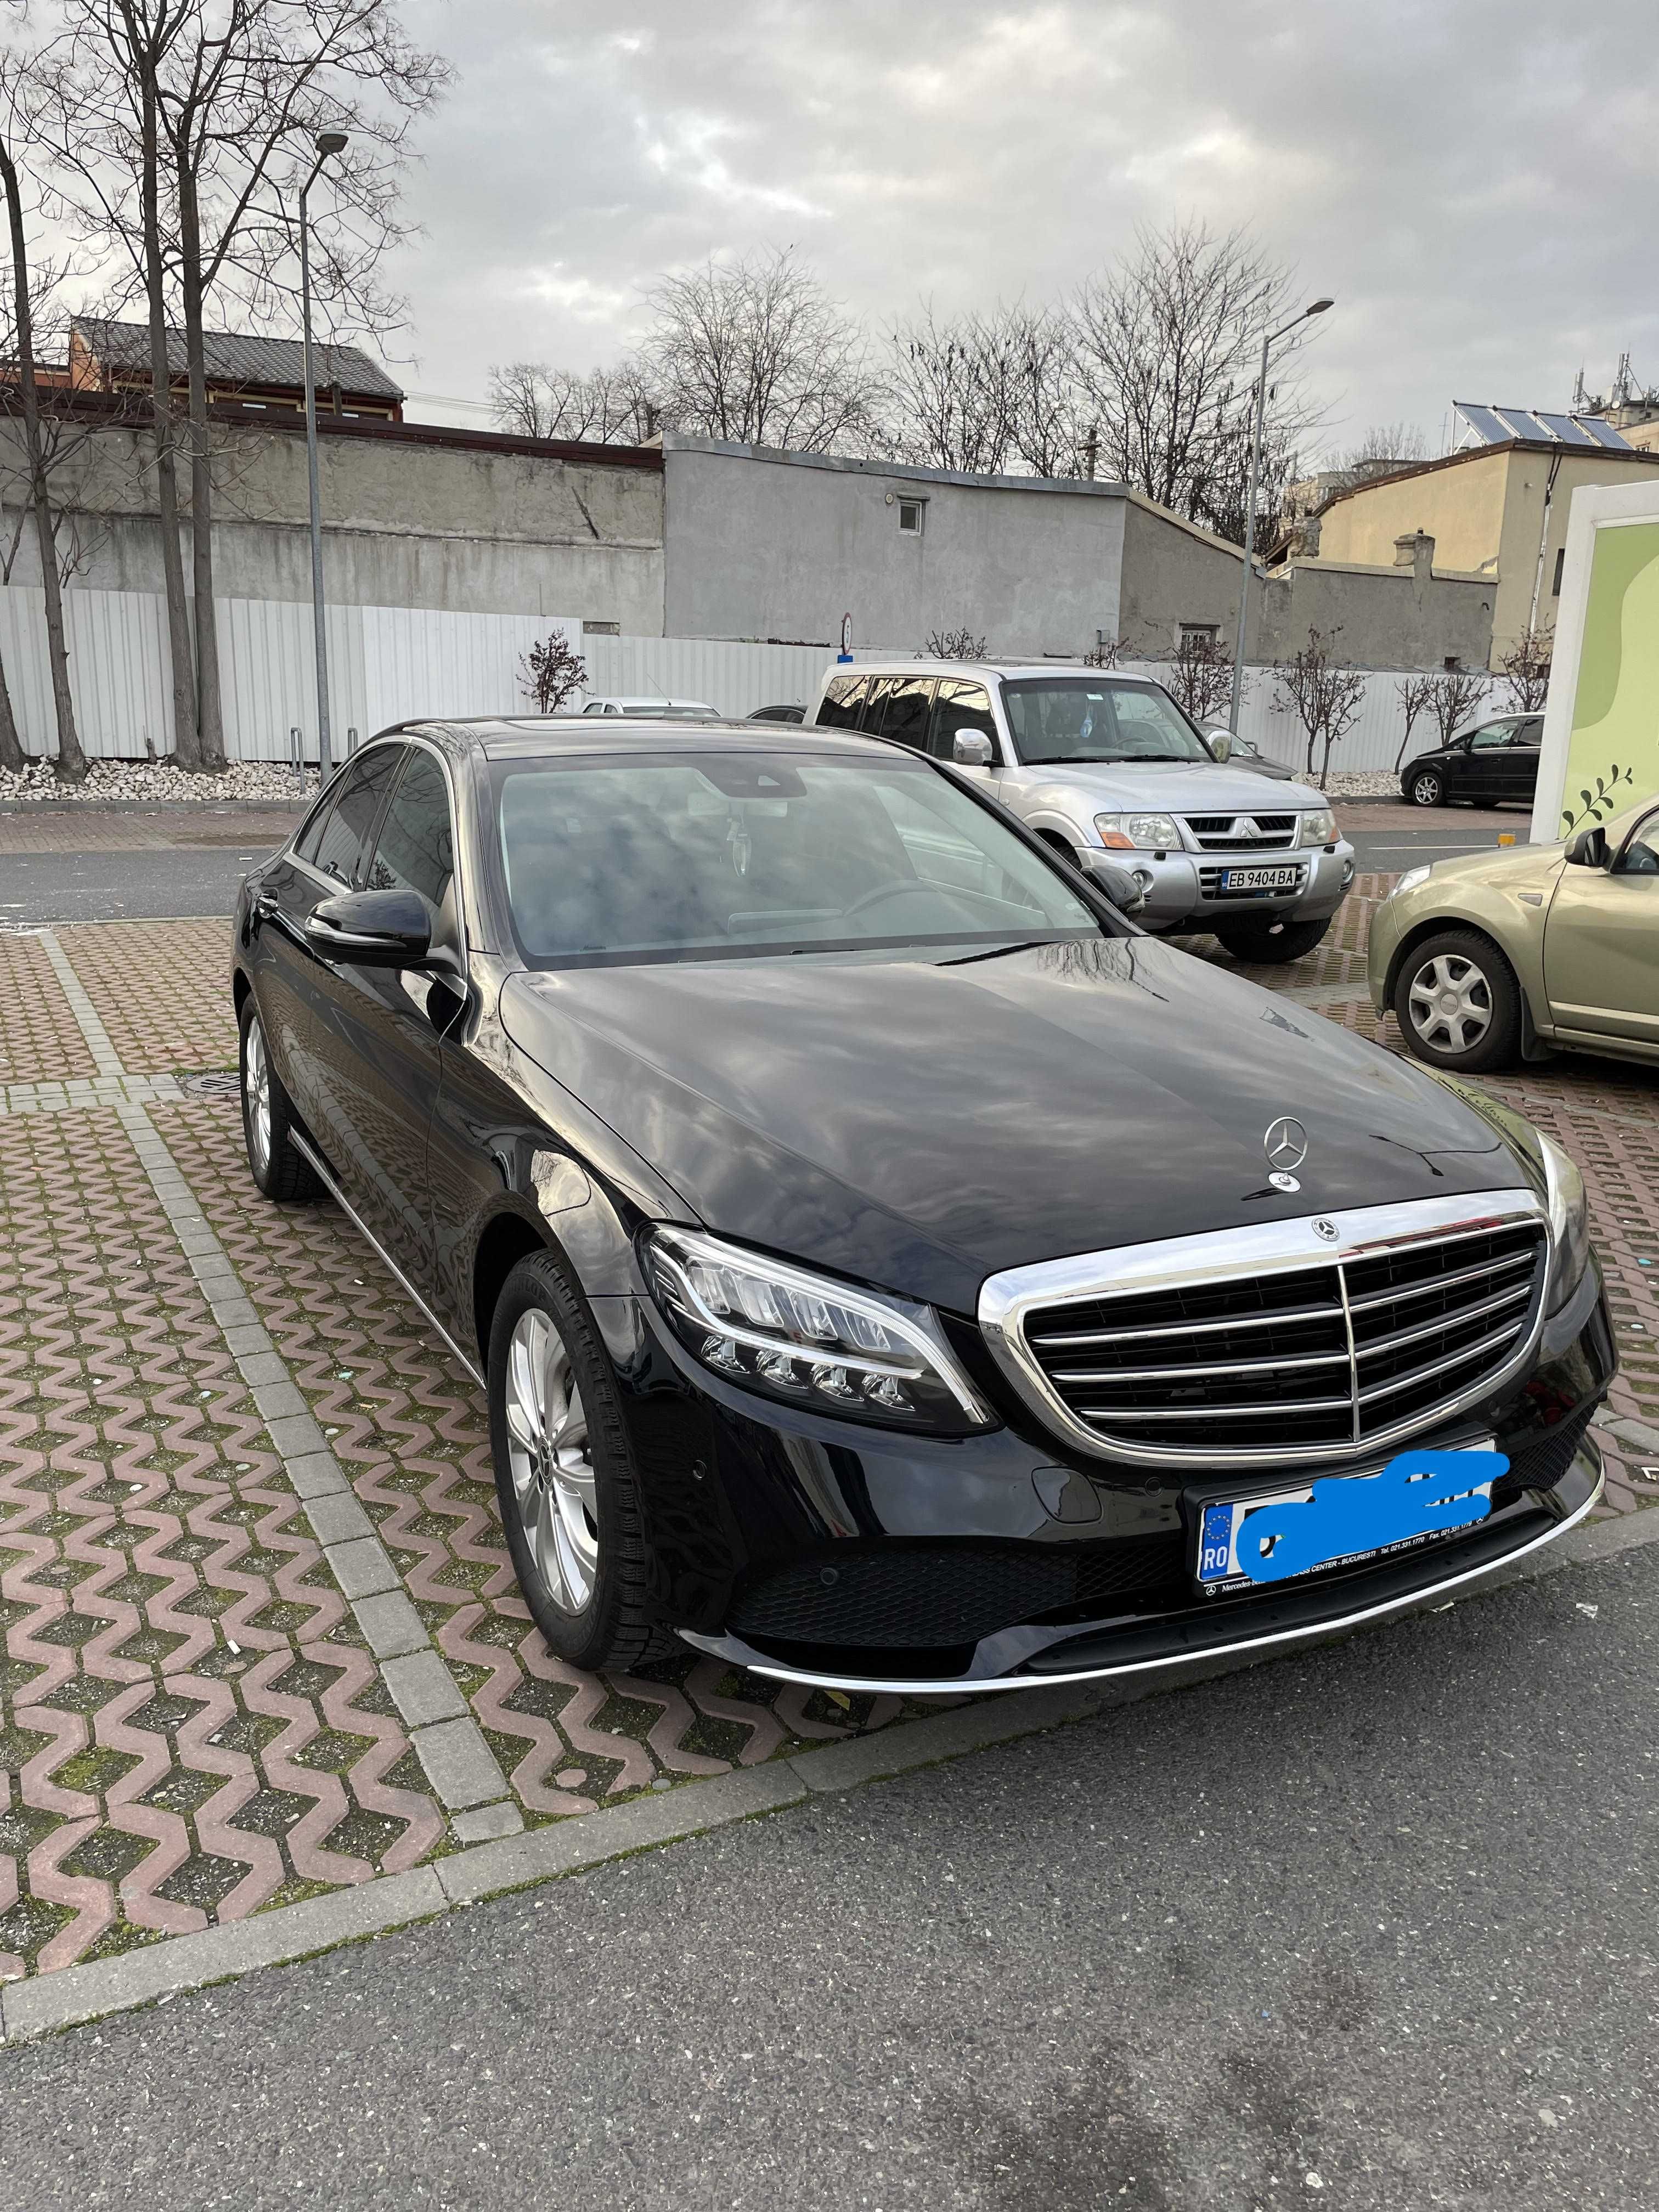 Mercedes-Benz clasa C, decembrie 2018, model facelift 2019